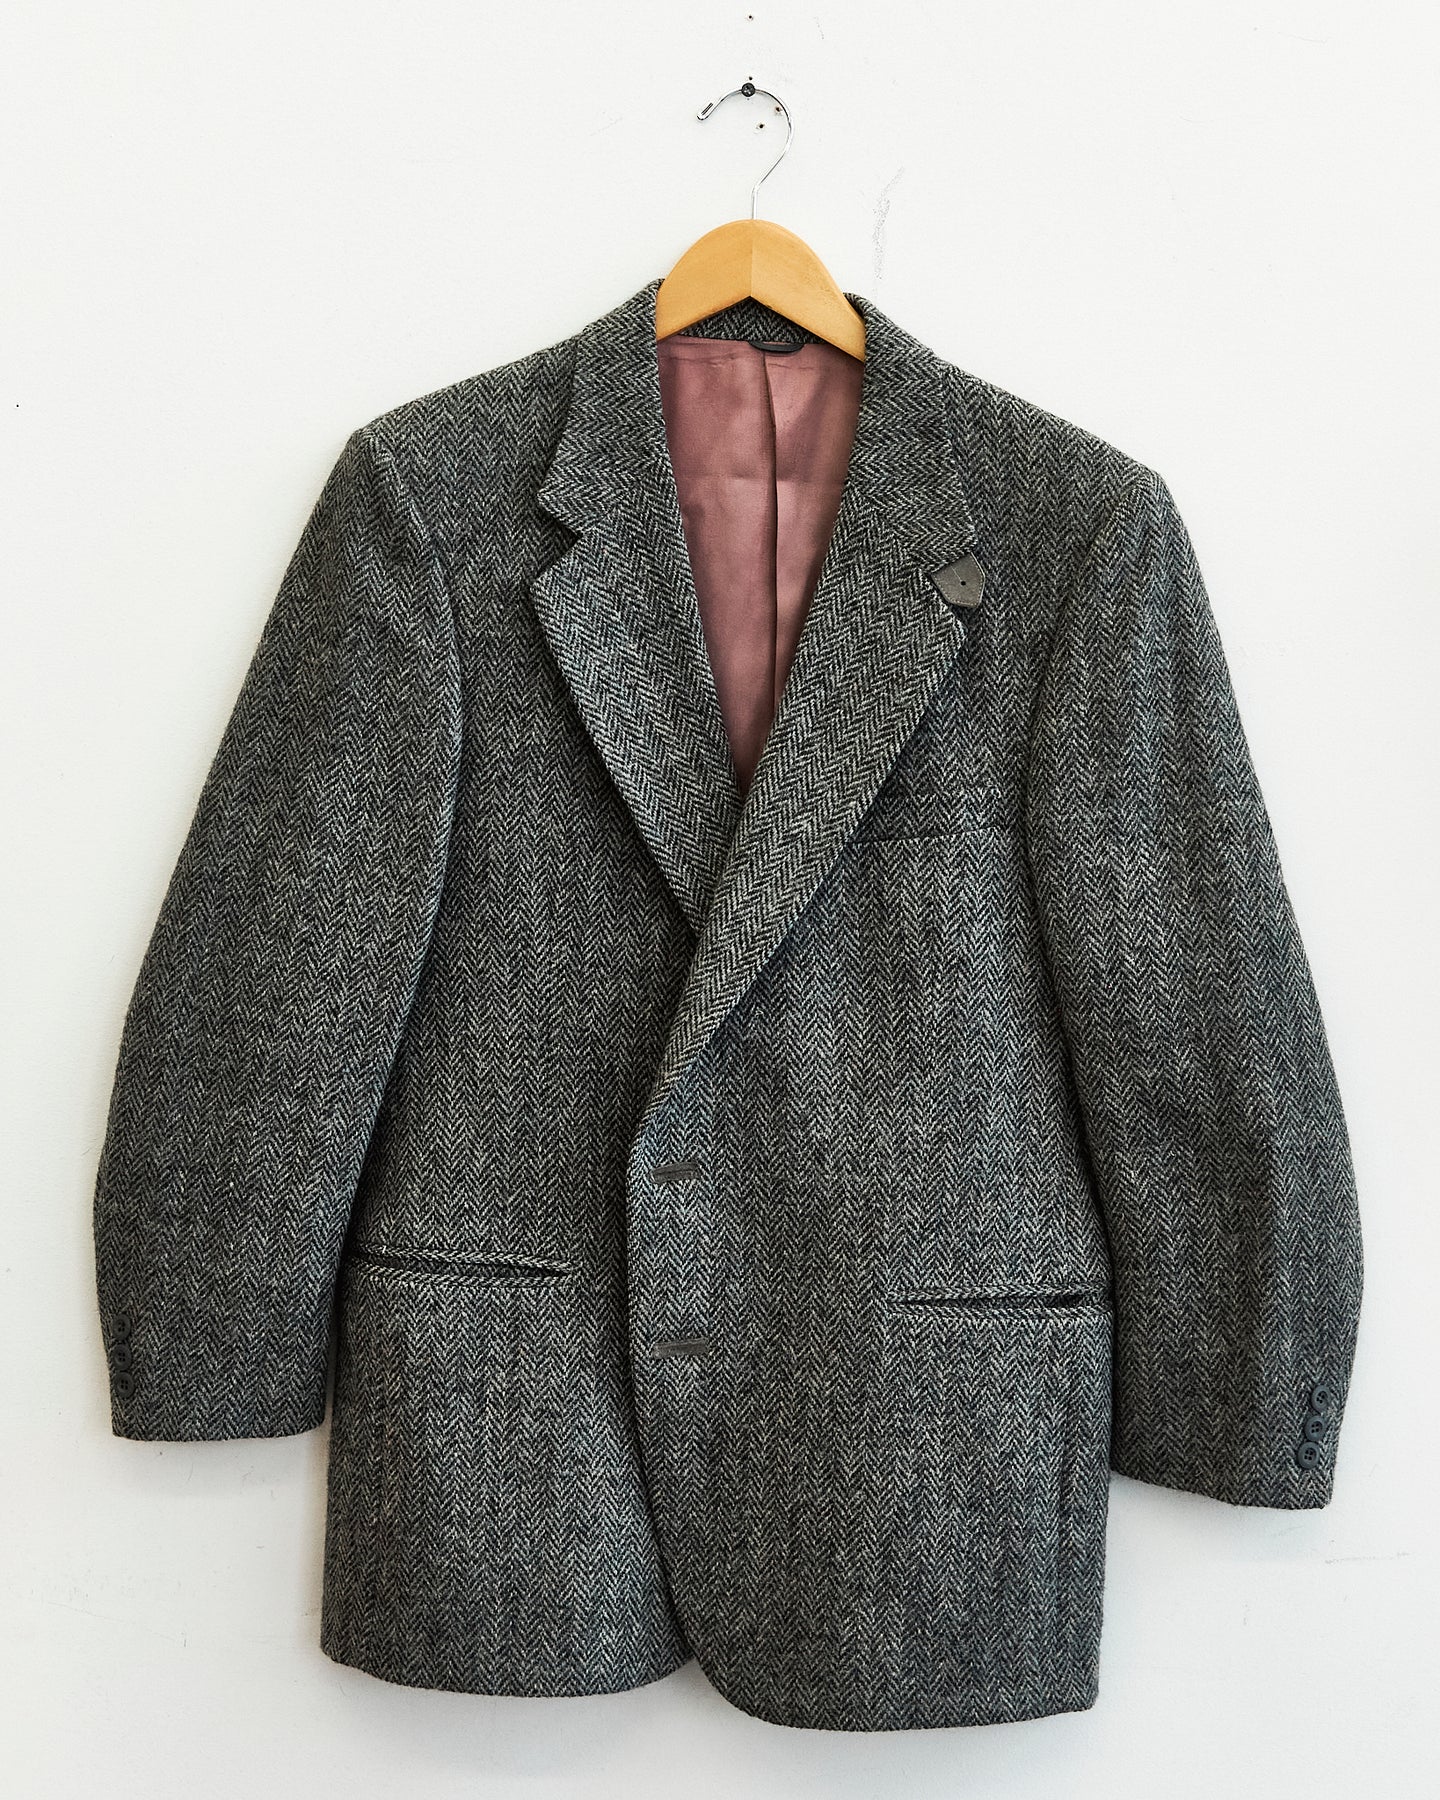 70's/80's Harris Tweed Blazer Jacket